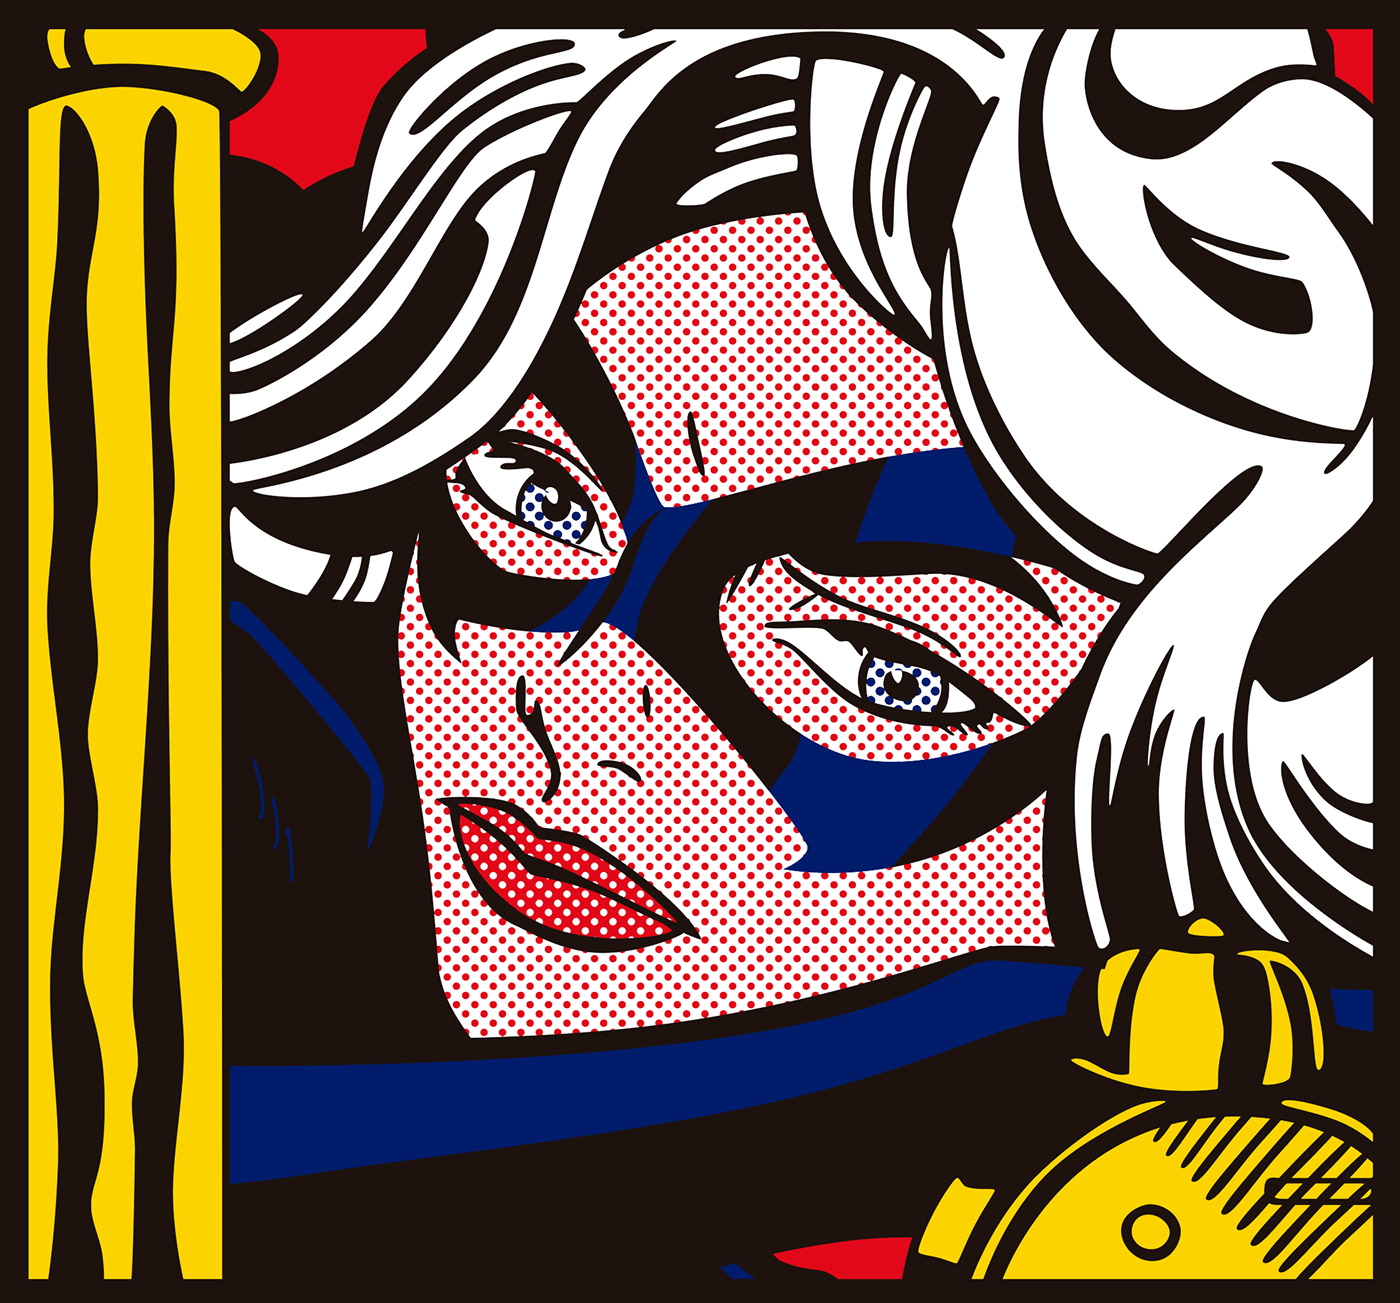 Pop Art SuperHero lichtenstein marvel dc comics comic wonderwoman Batgirl feminist